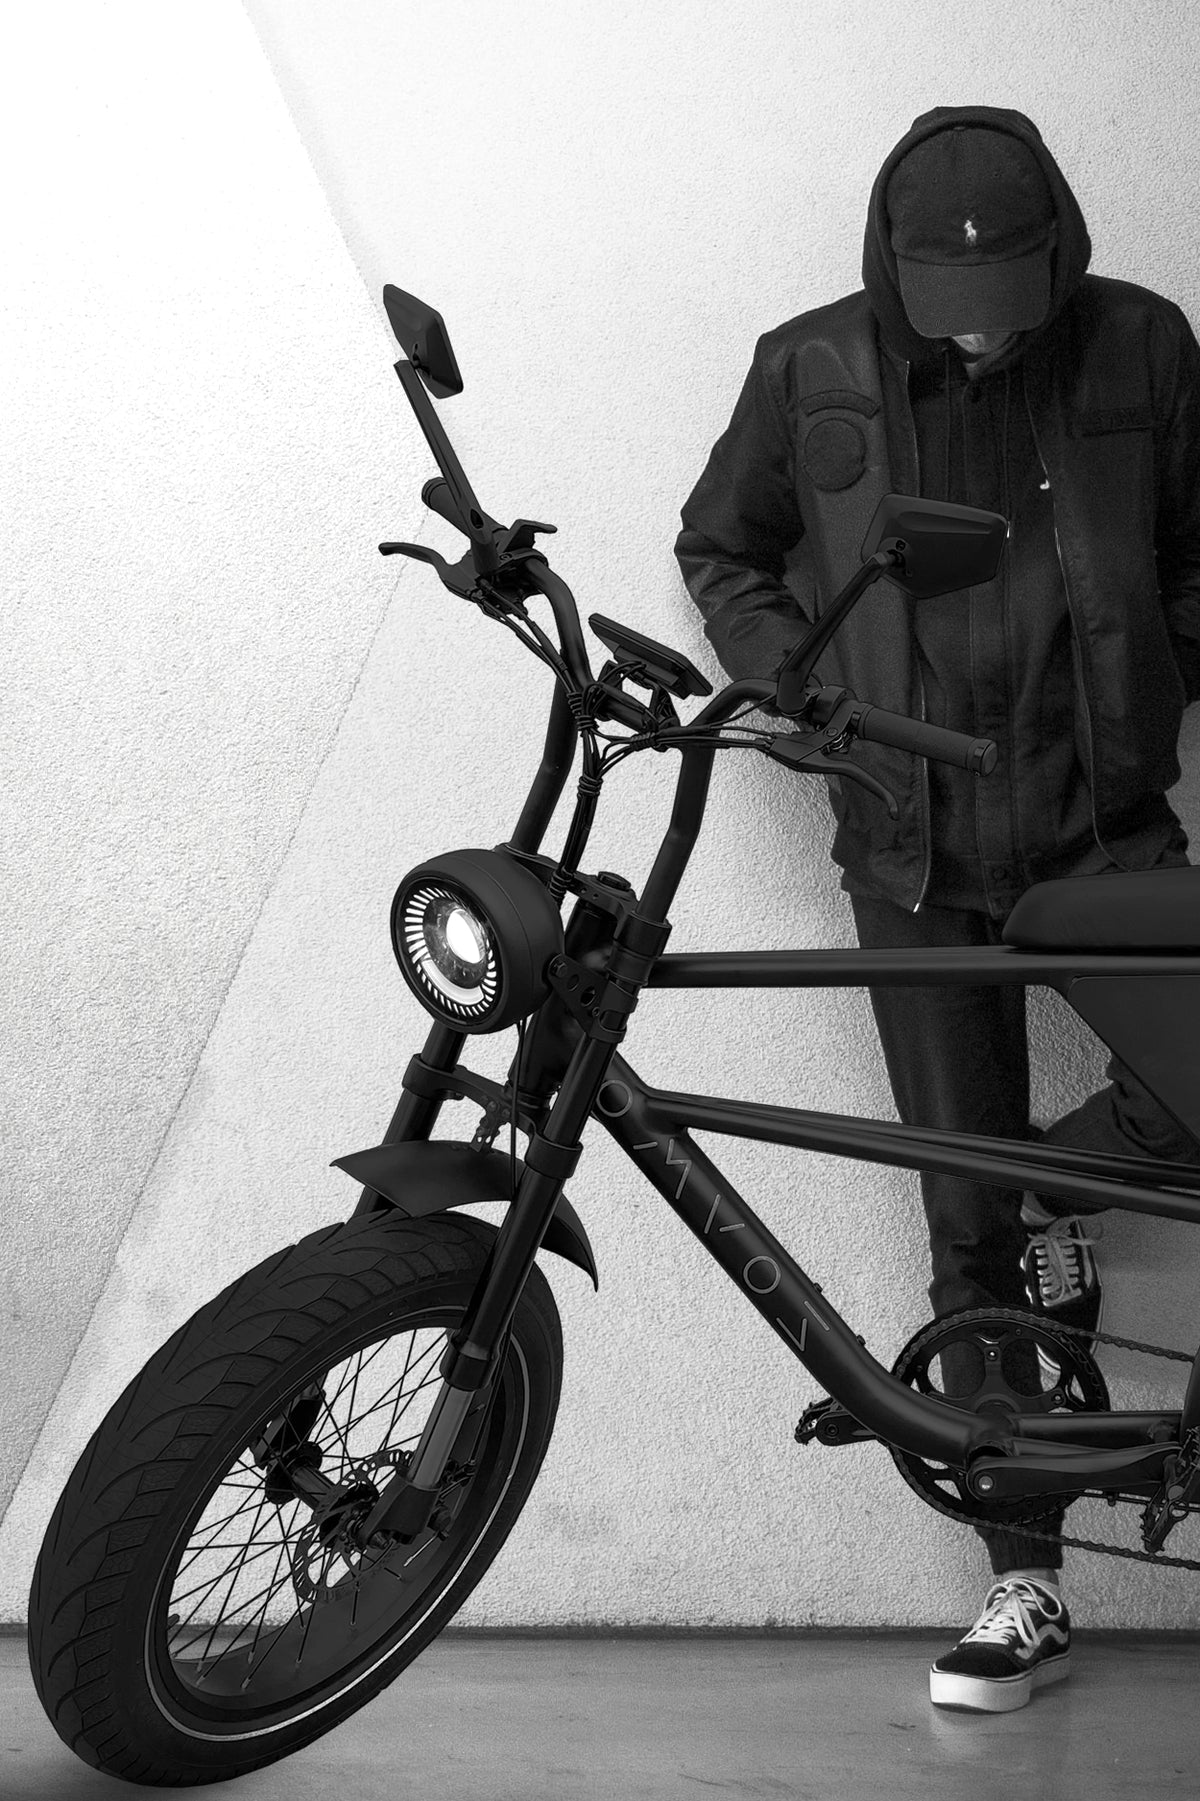 OMVOS Nomad Cross Fat Tire E-bike 胖胎電動輔助自行車與騎乘者